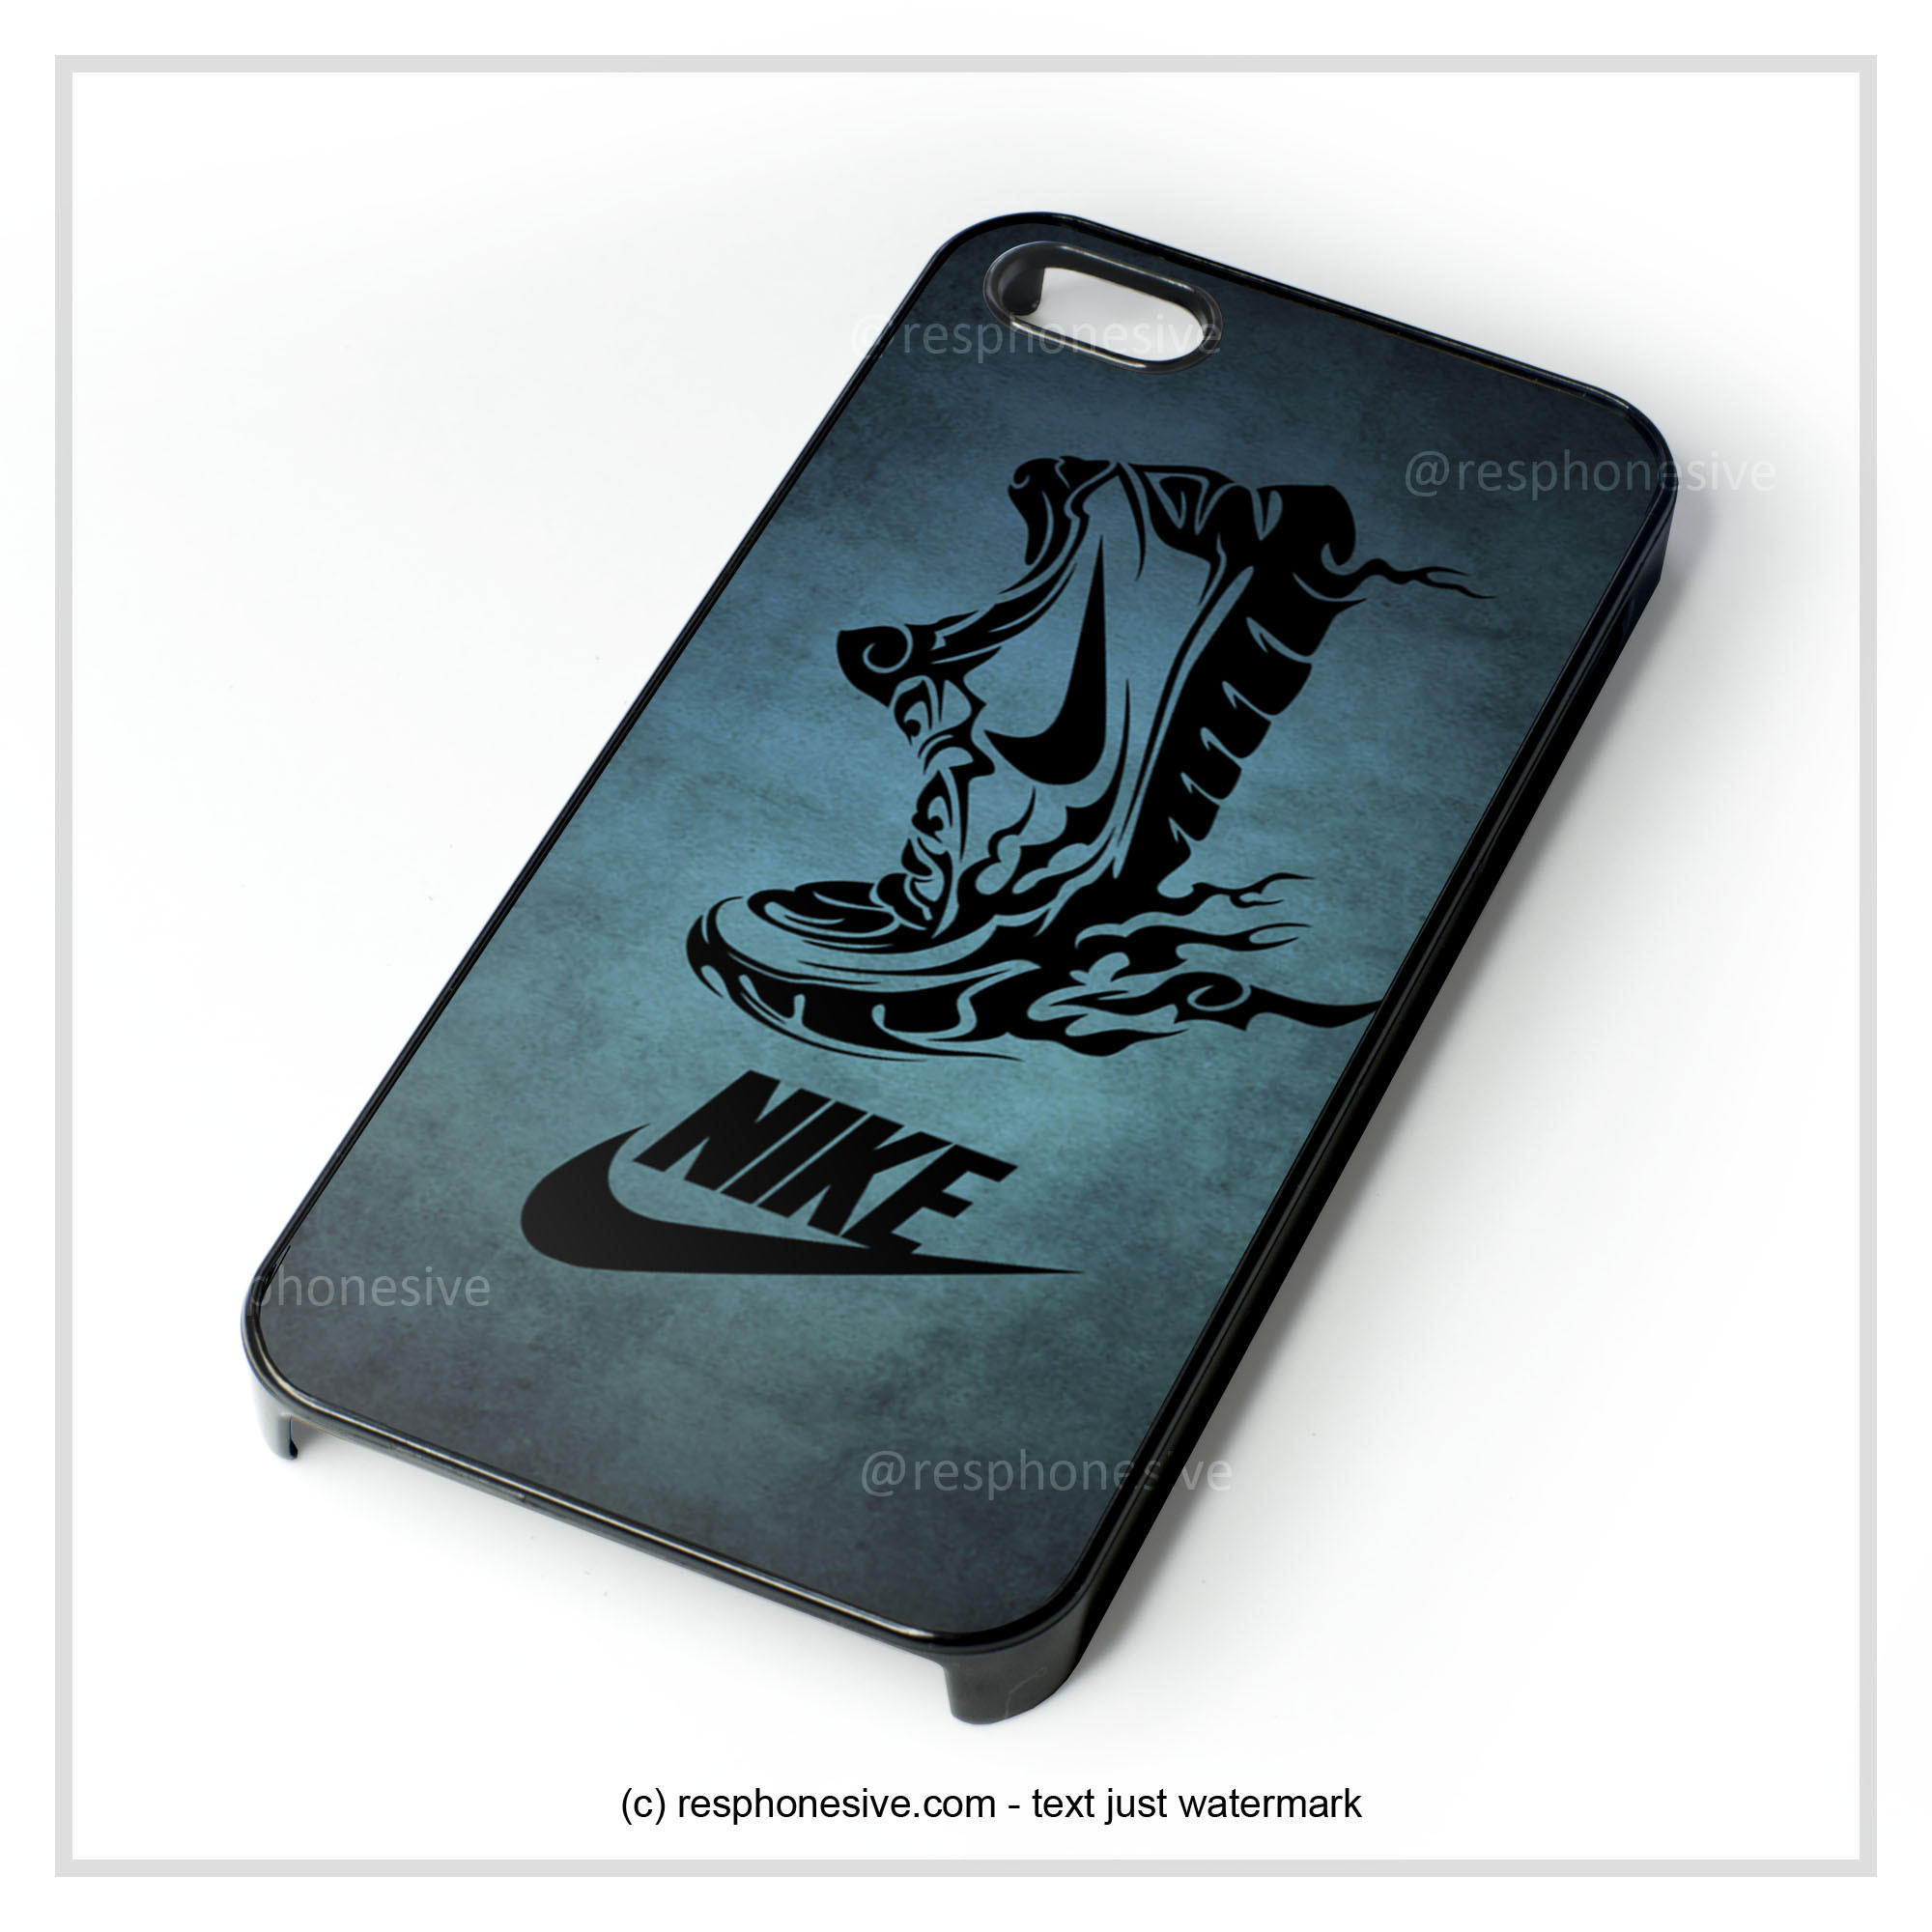 Run Nike Wallpaper iPhone 4s 5s 5c From Resphonesive